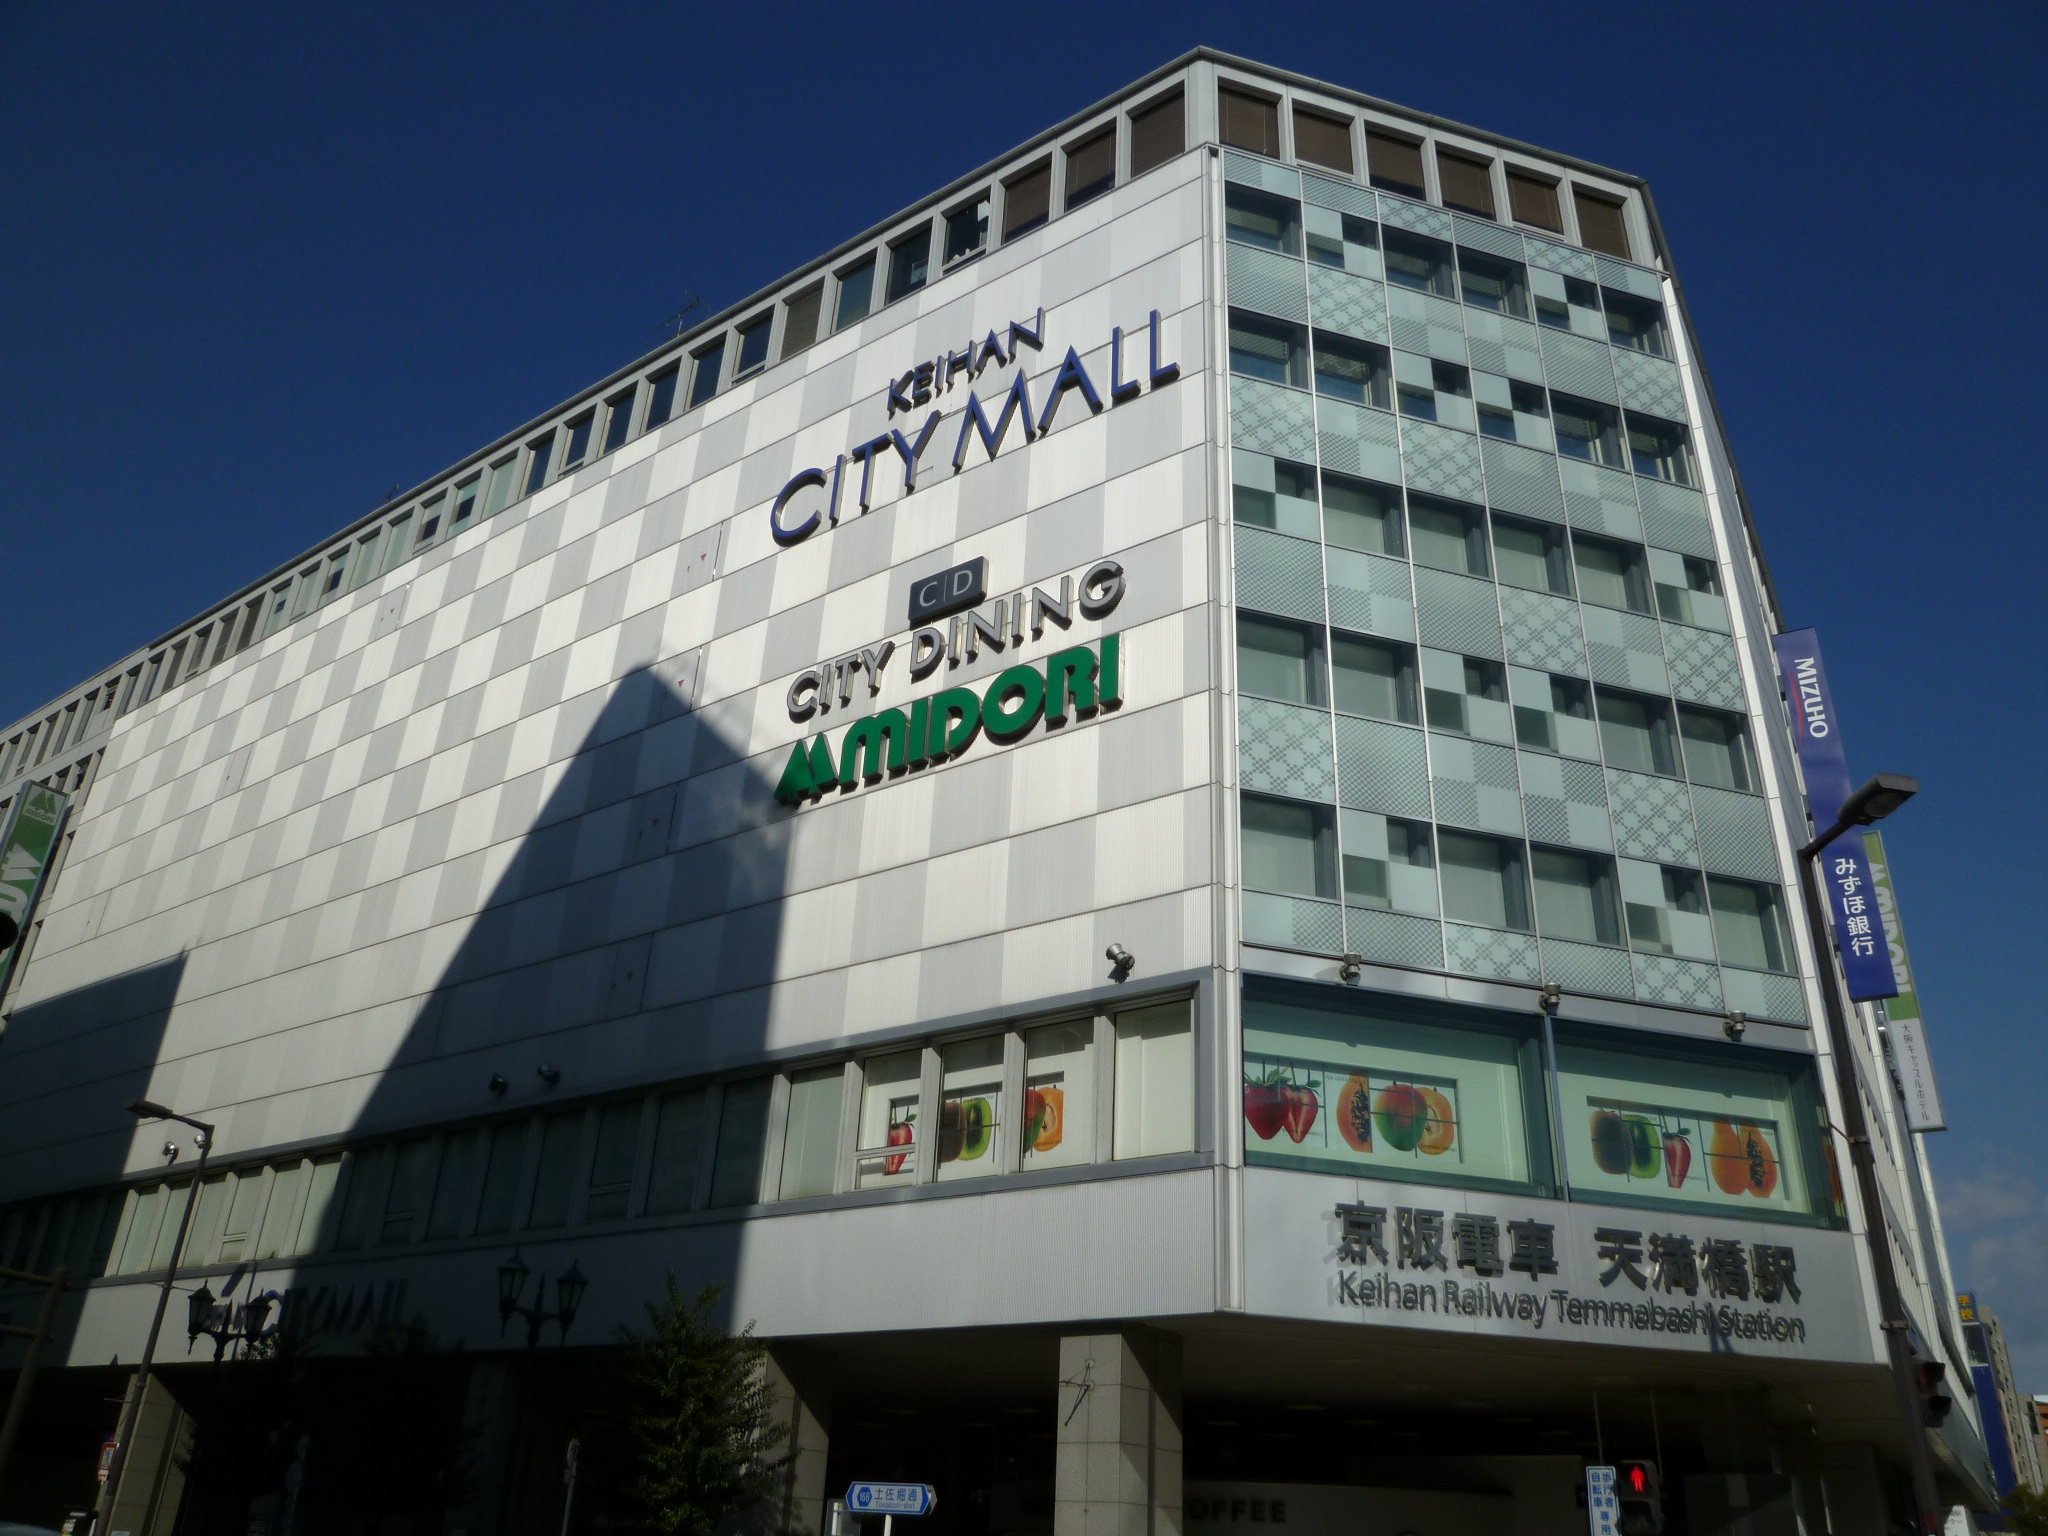 Shopping centre. 333m to Keihan City Mall (shopping center)